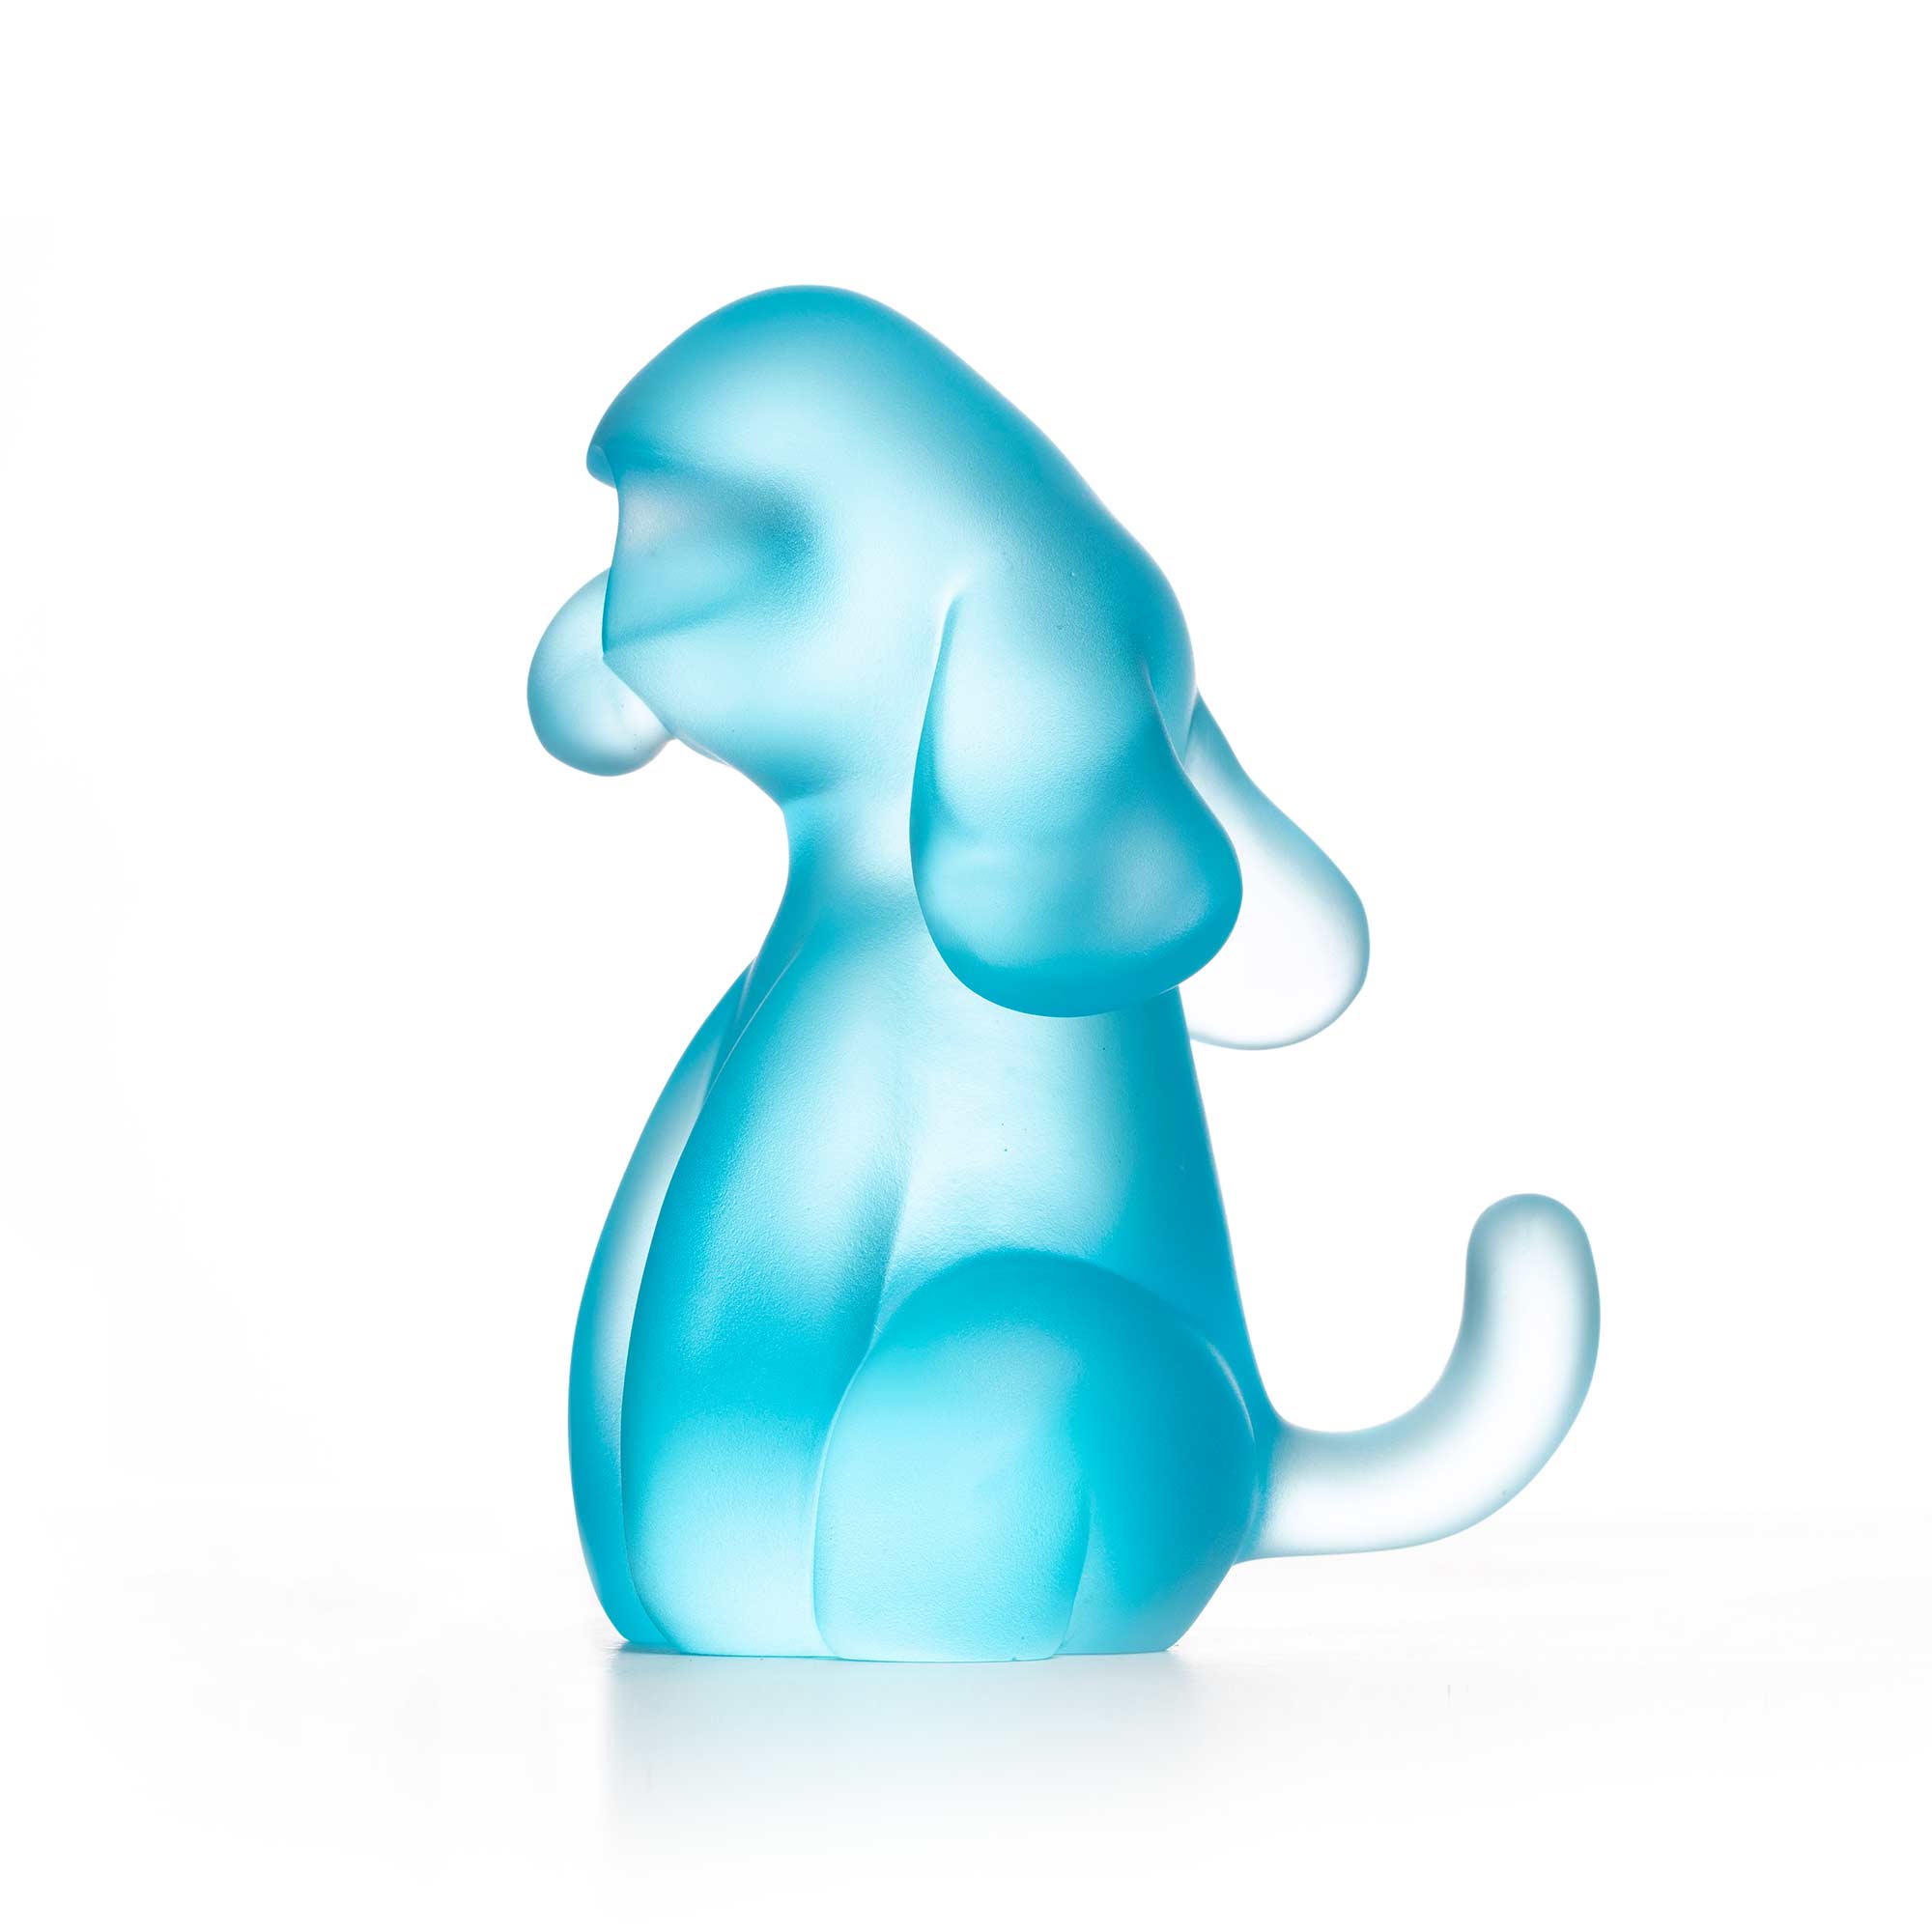 Dog Roar, blue crystal sculpture, limited edition by artist Ferdi B Dick, side view 